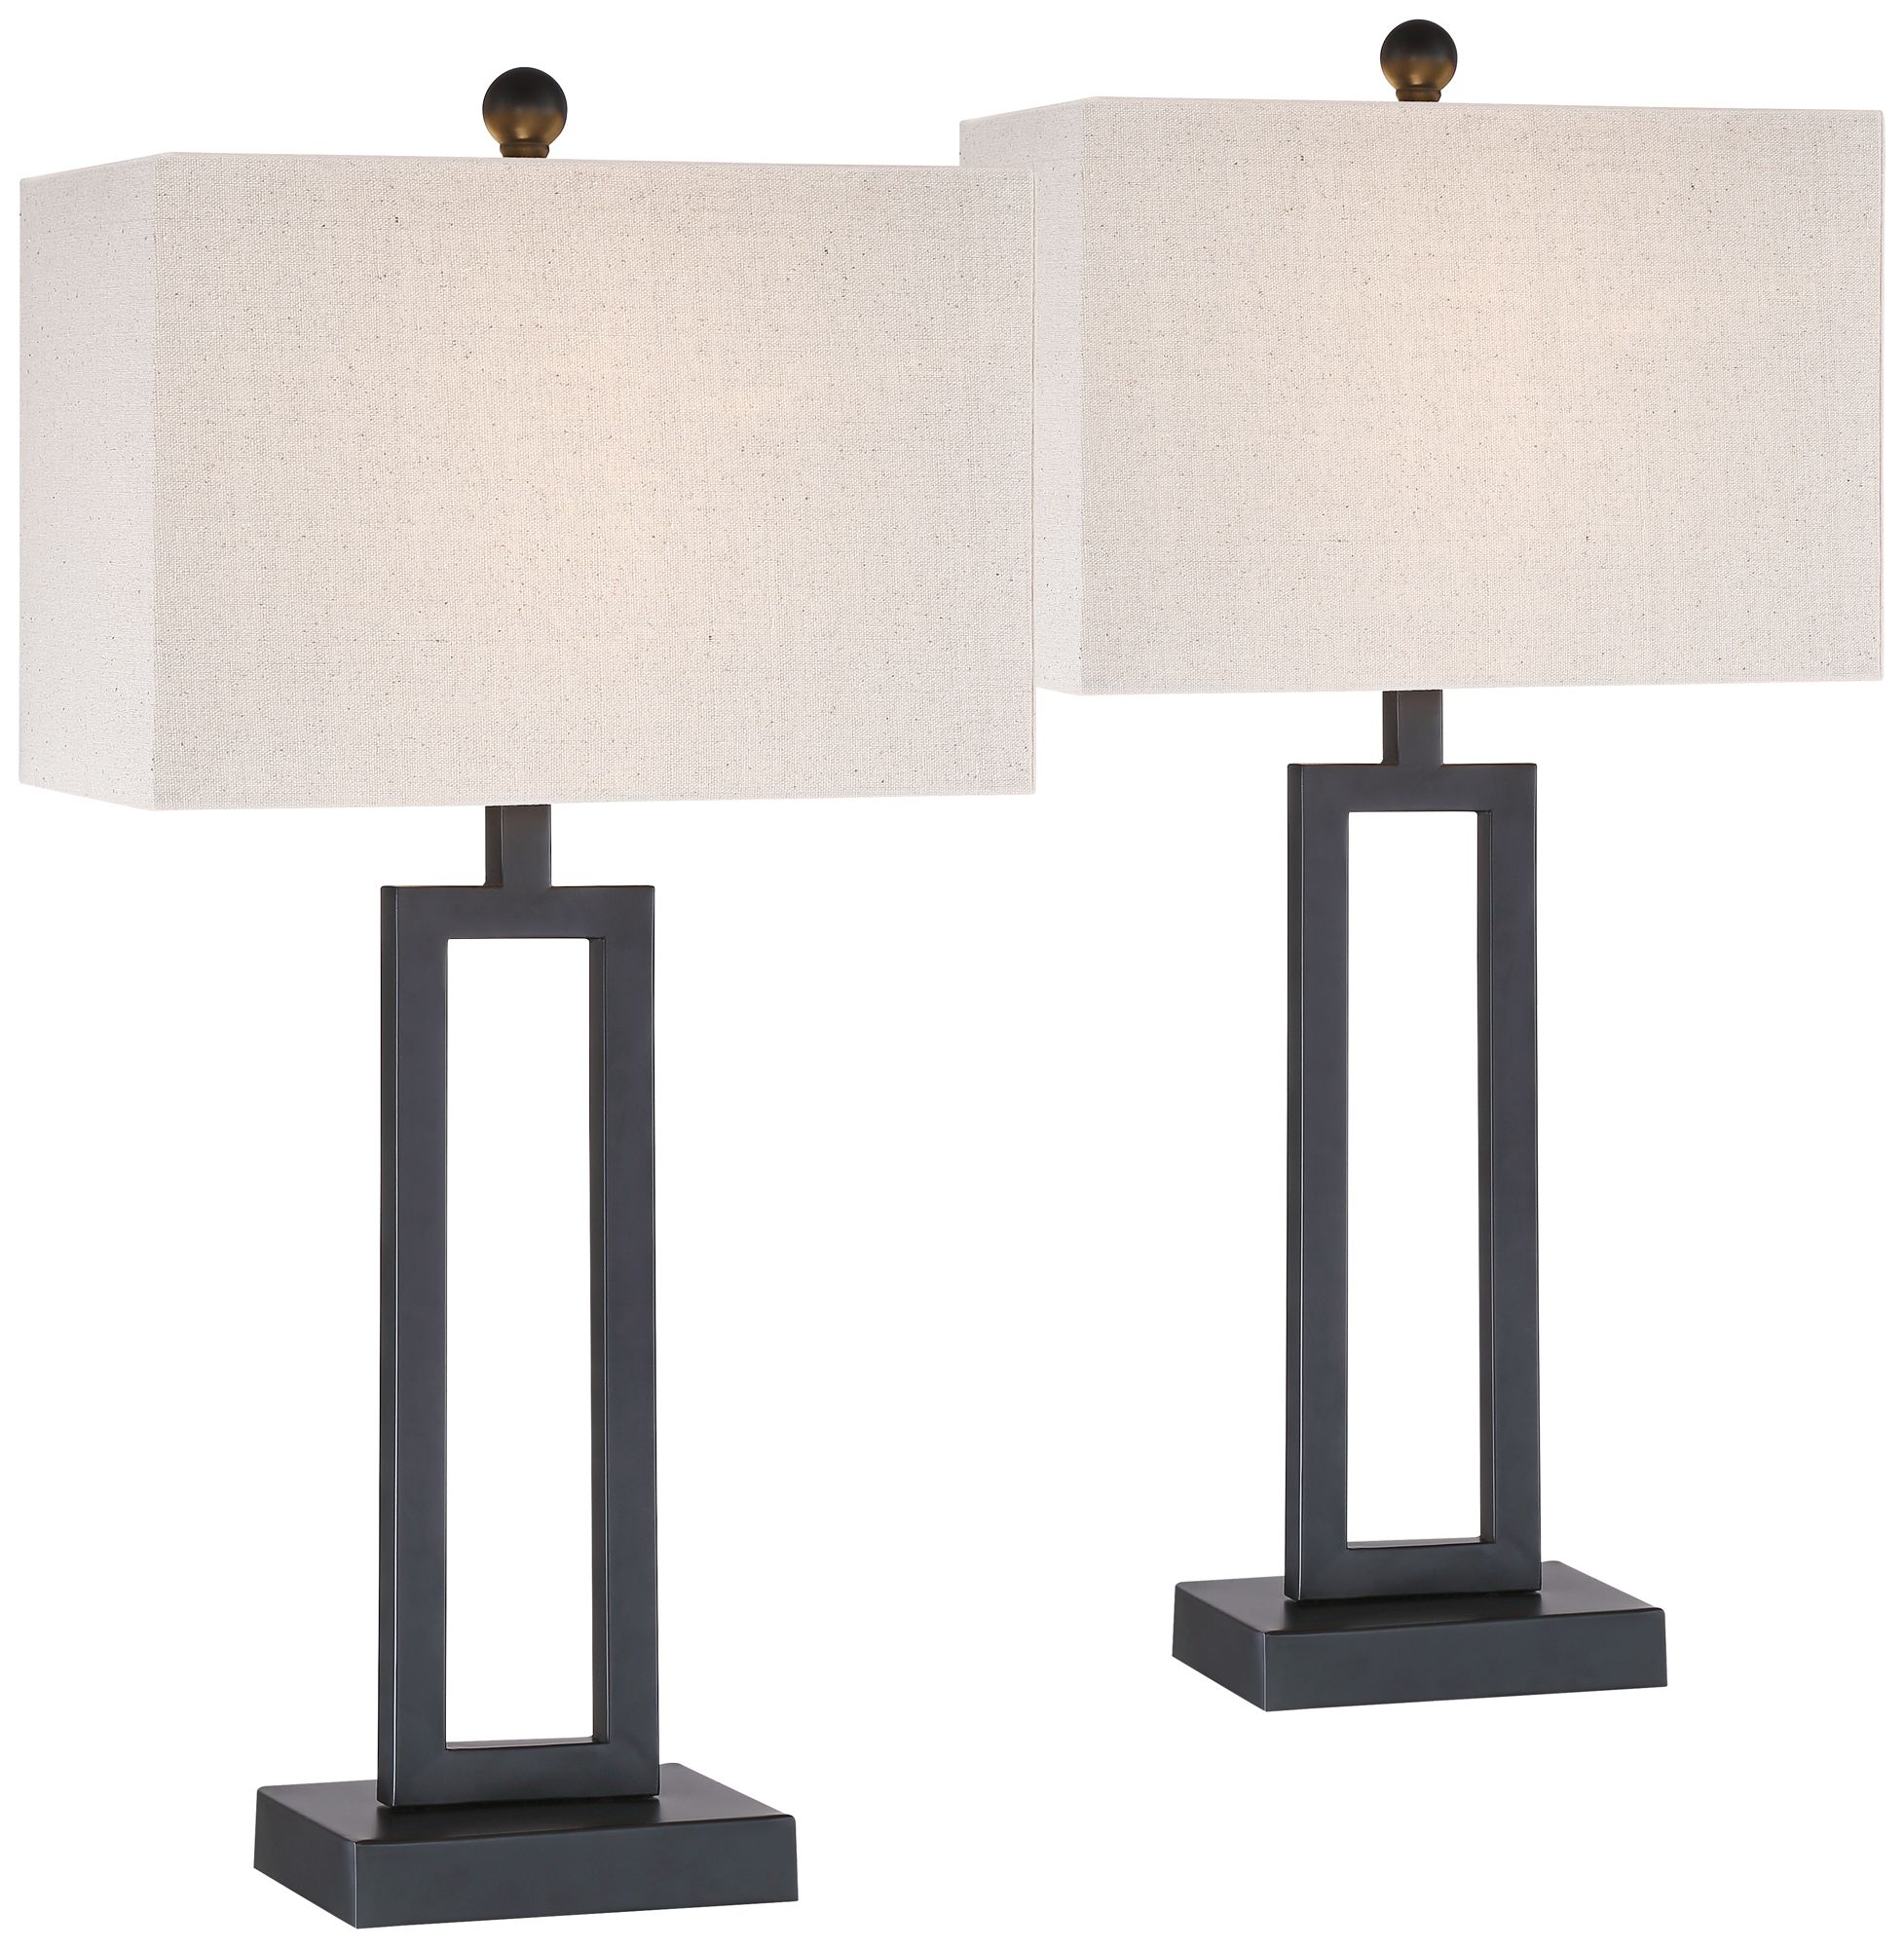 modern lamps